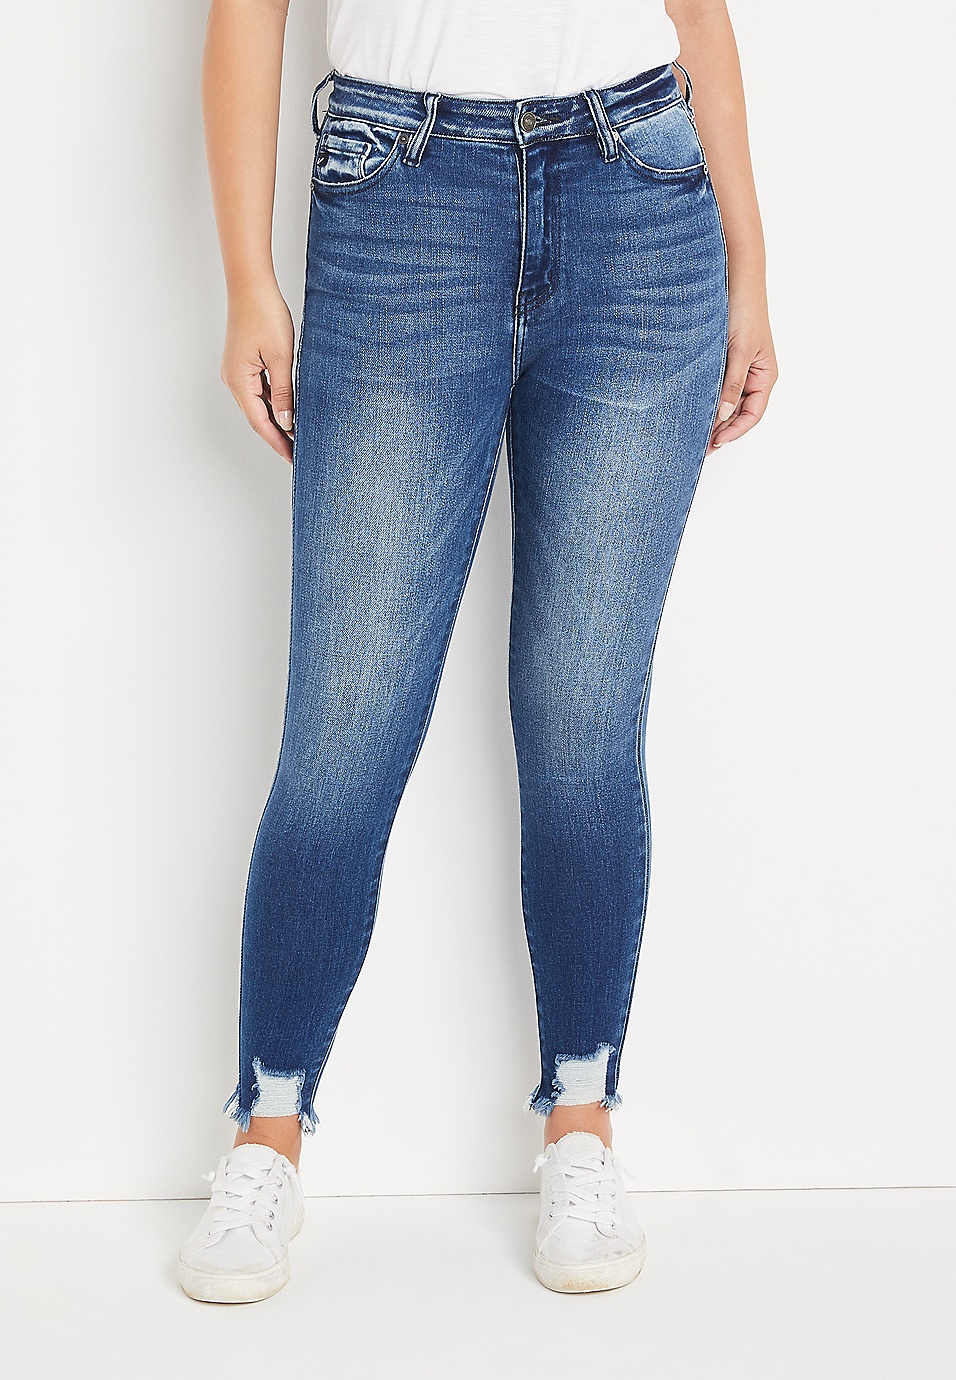 Earl Jeans Womens Size 10 Straight Mid Rise Medium Wash Blue Denim Jeans